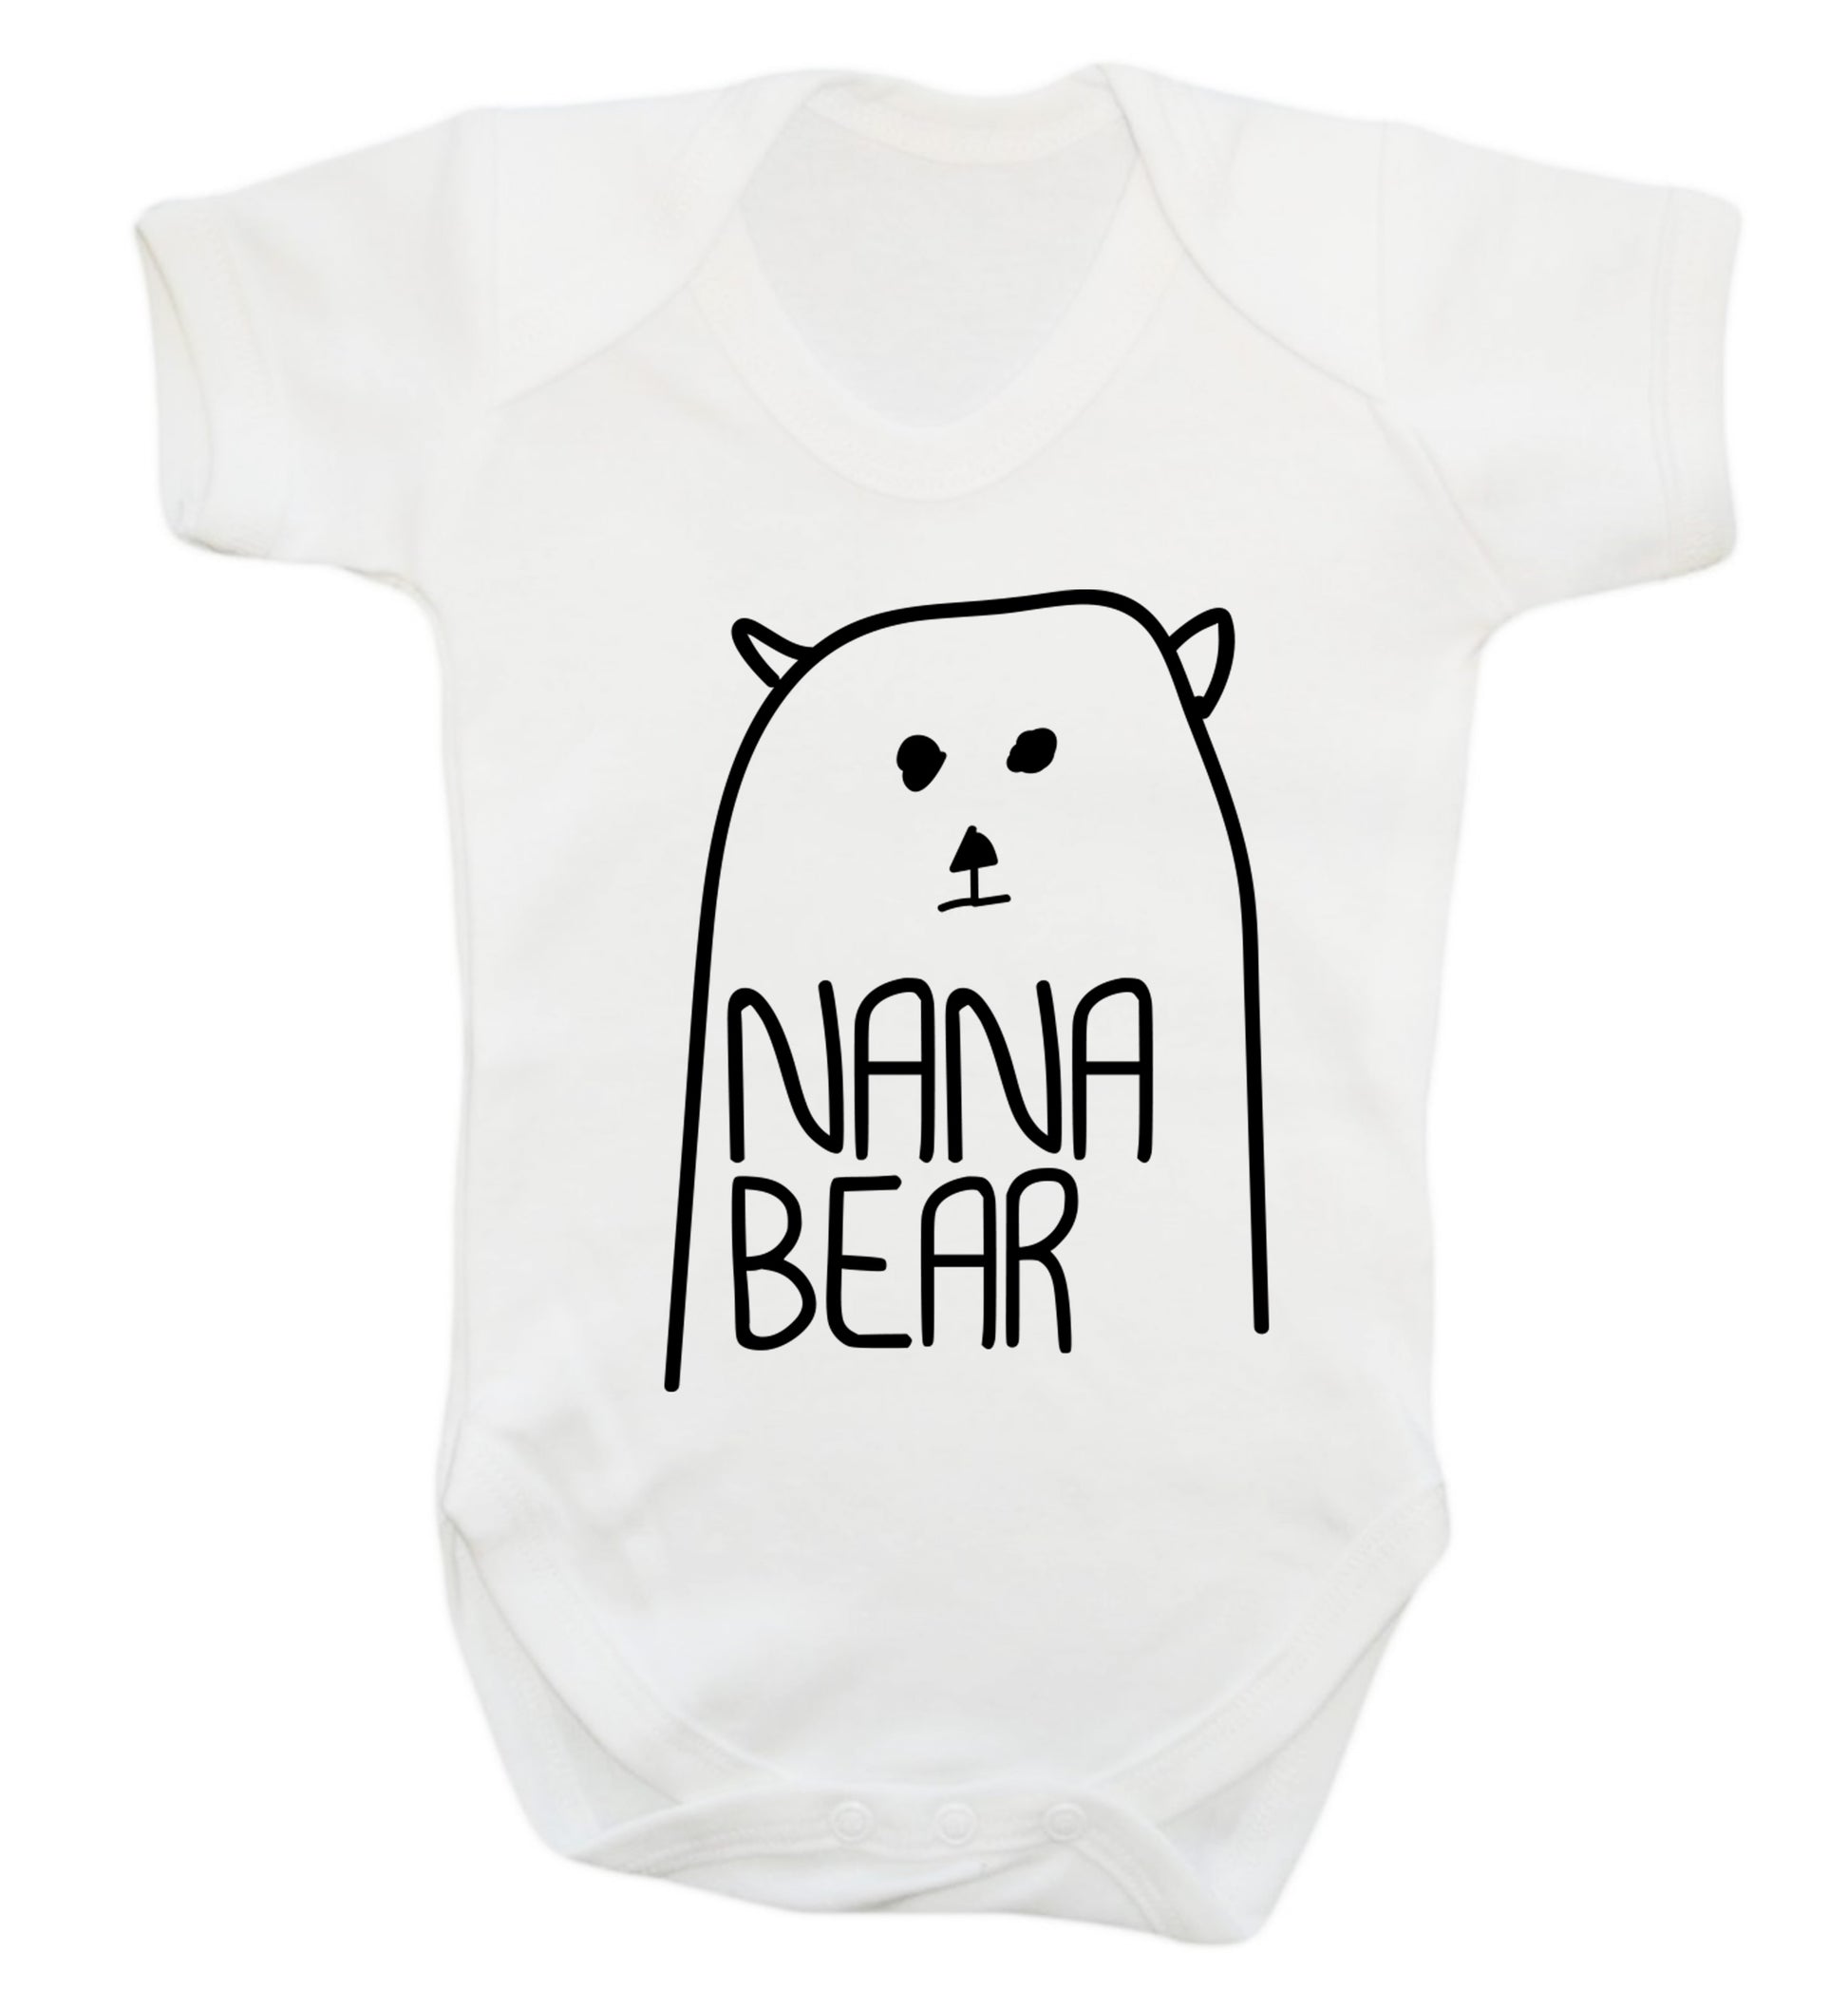 Nana bear Baby Vest white 18-24 months